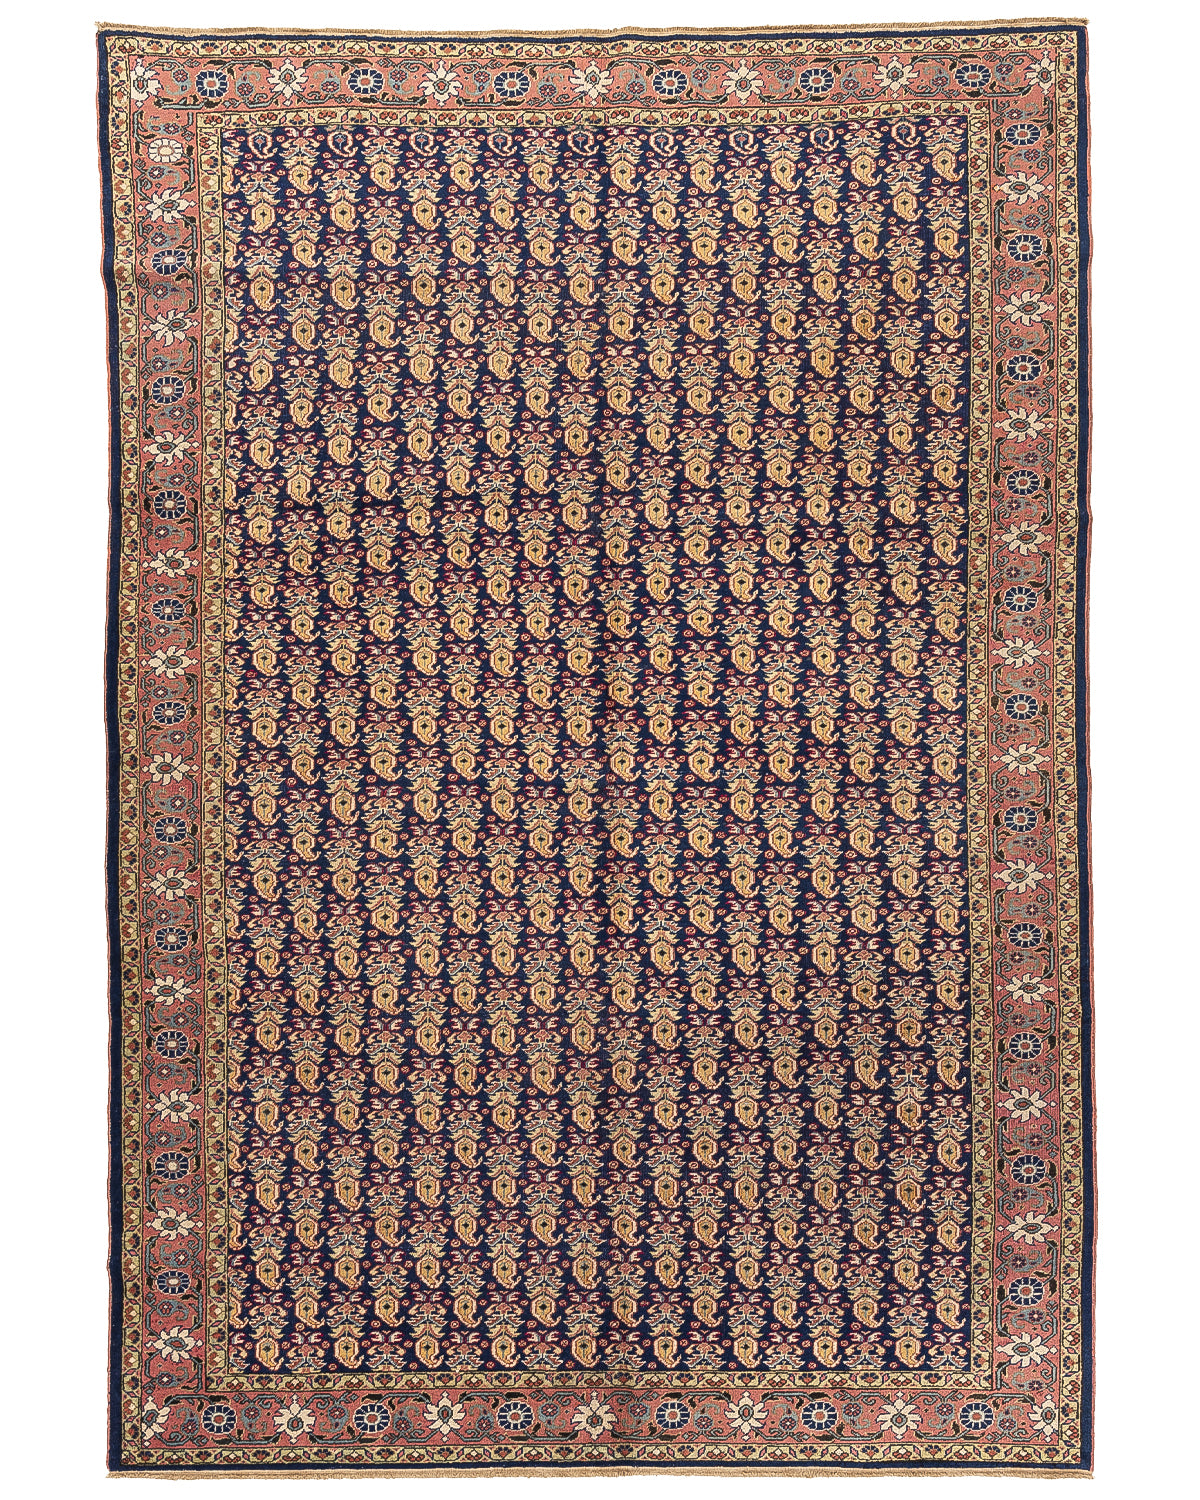 Oriental Rug Anatolian Handmade Wool On Cotton 198 X 290 Cm - 6' 6'' X 9' 7'' Navy Blue C012 ER23